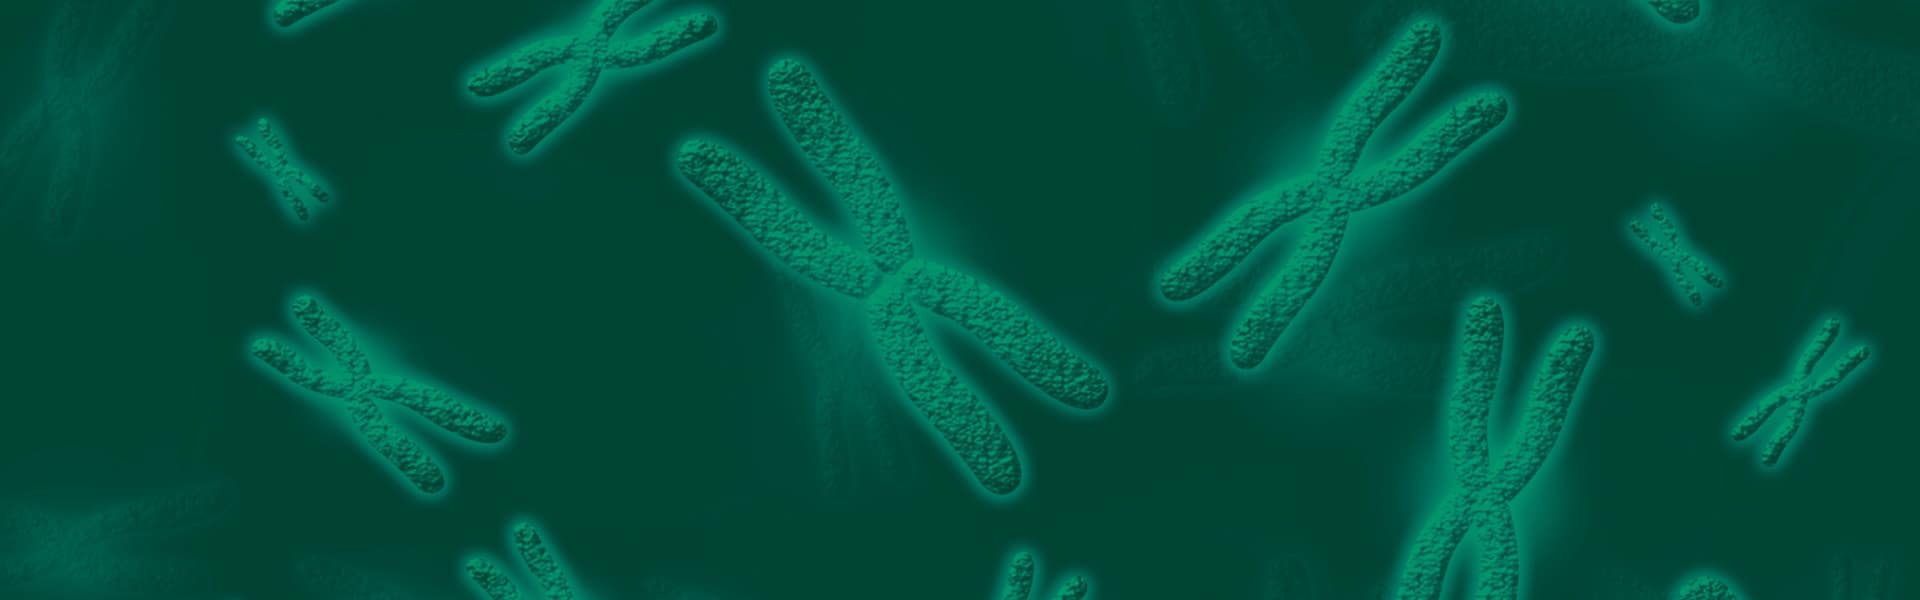 preconceptional carrier screening chromosomes